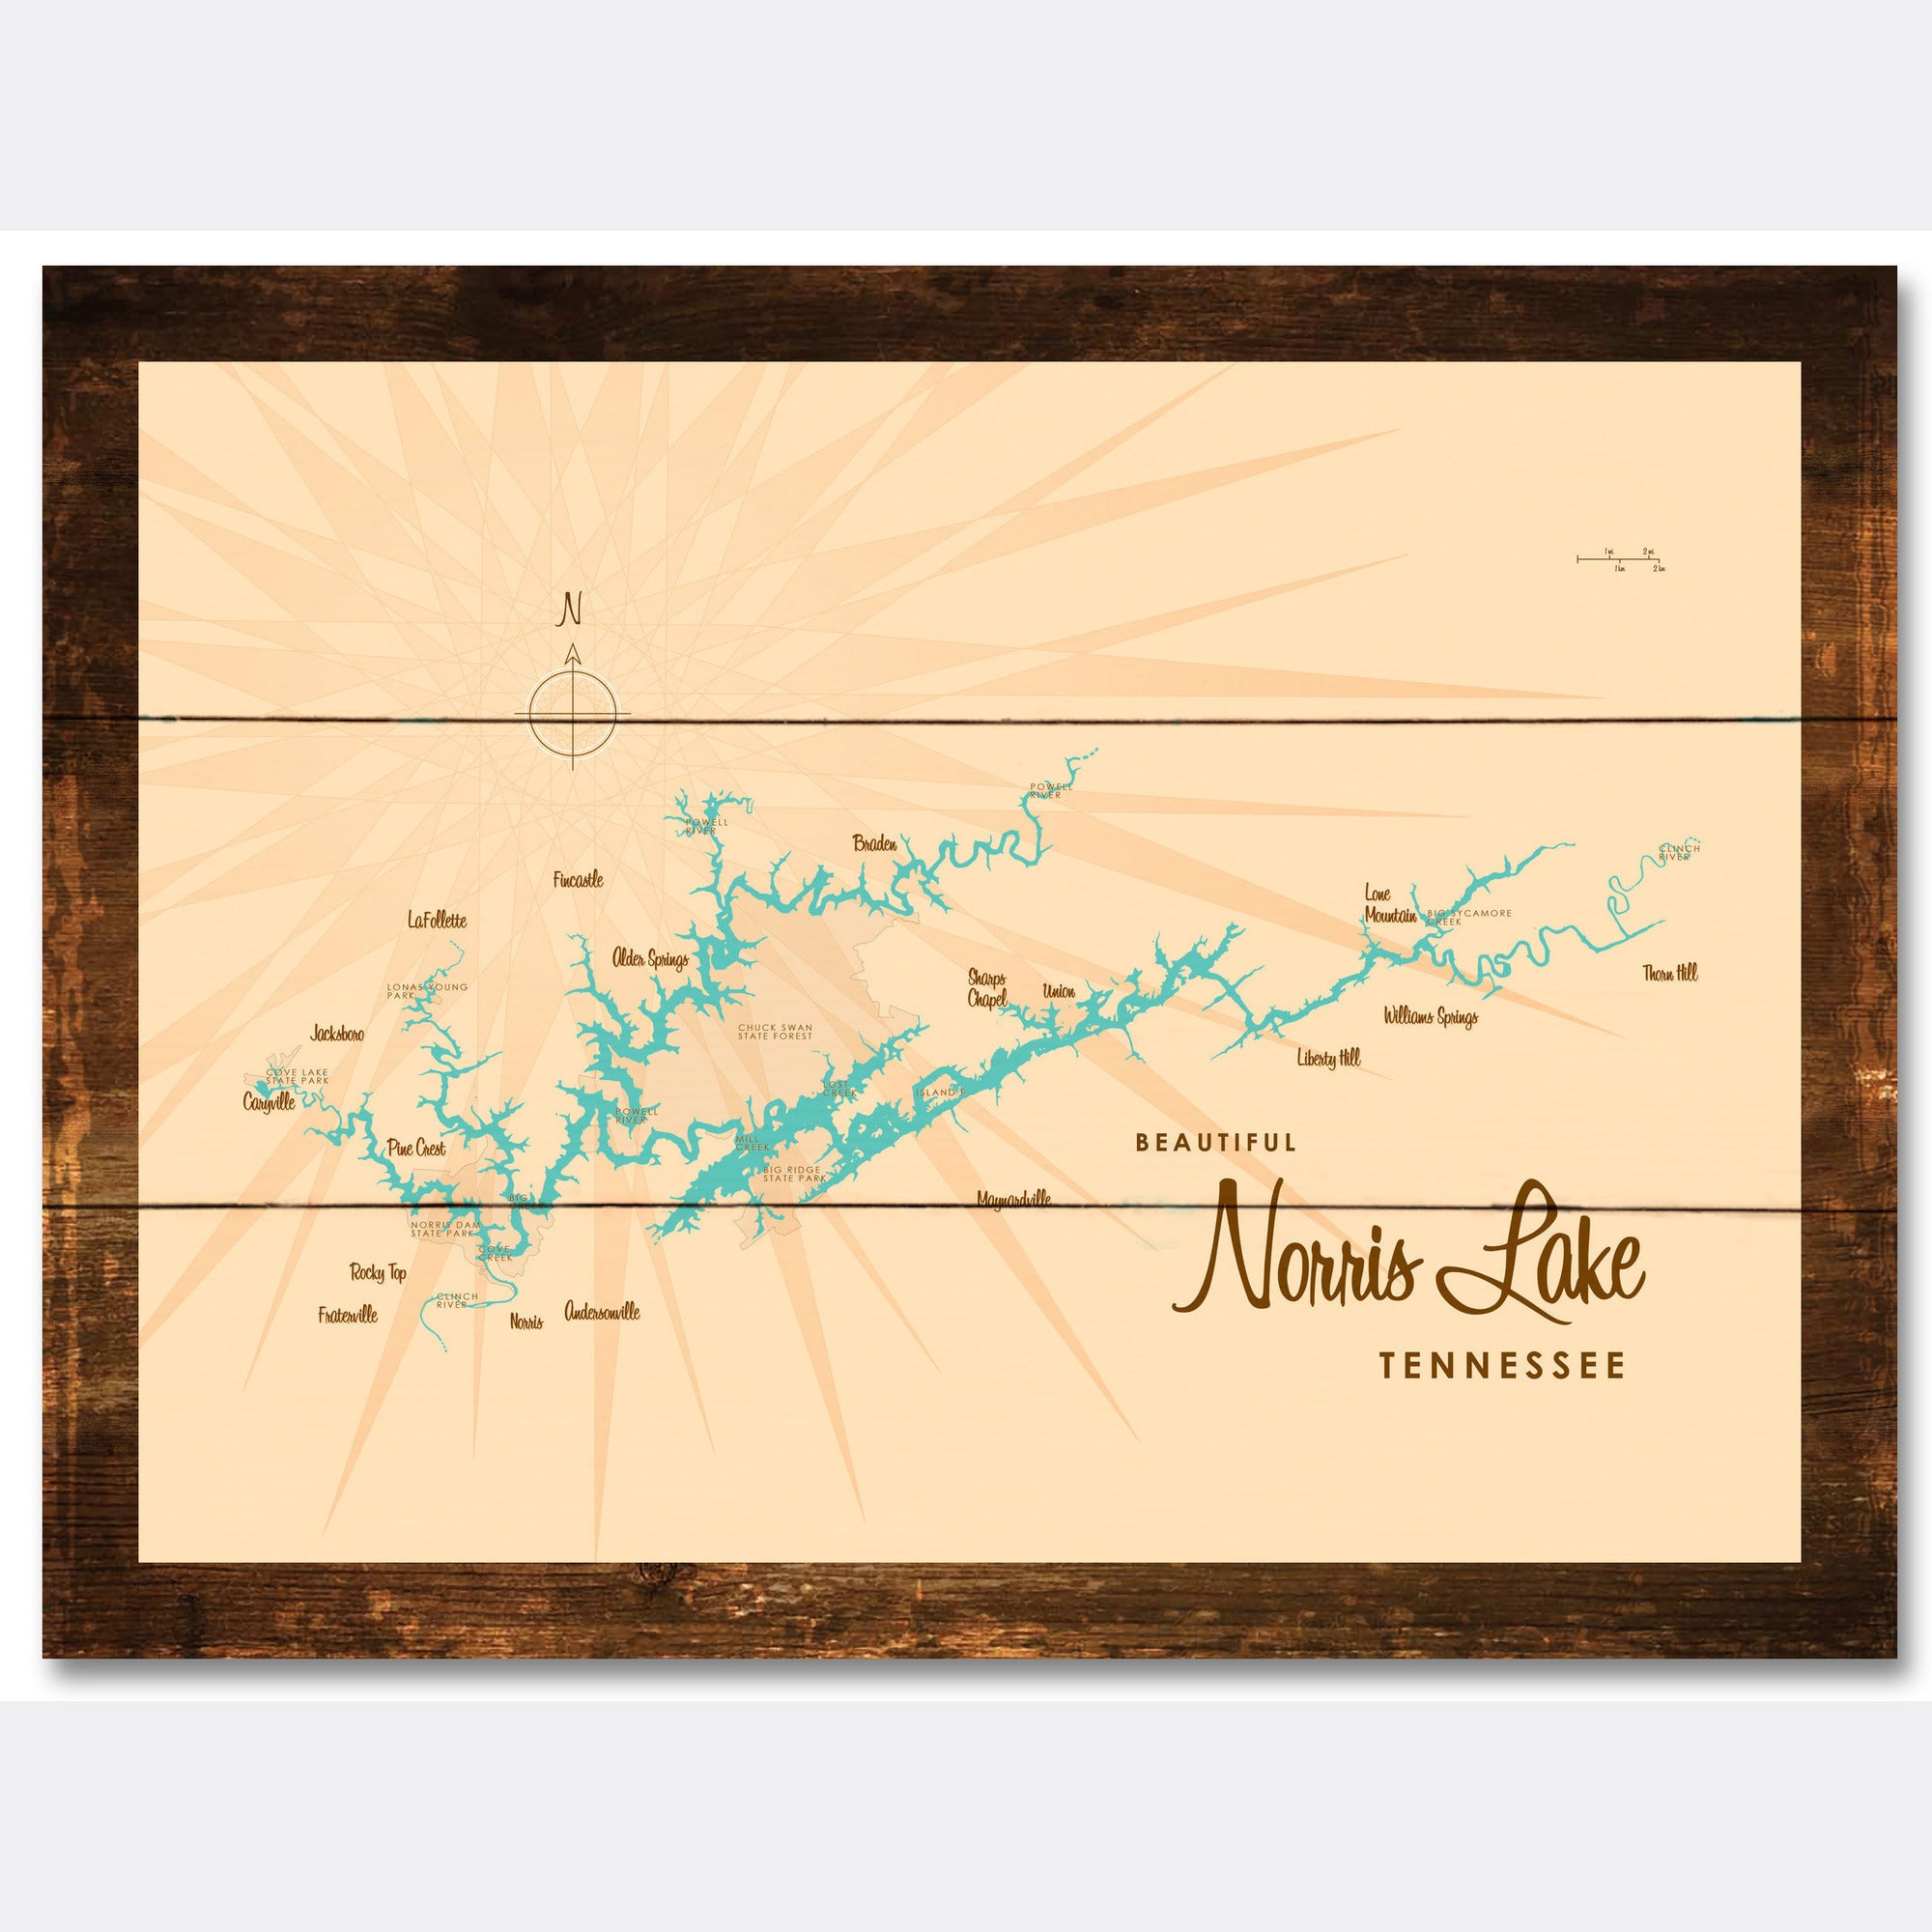 Norris Lake Tennessee, Rustic Wood Sign Map Art